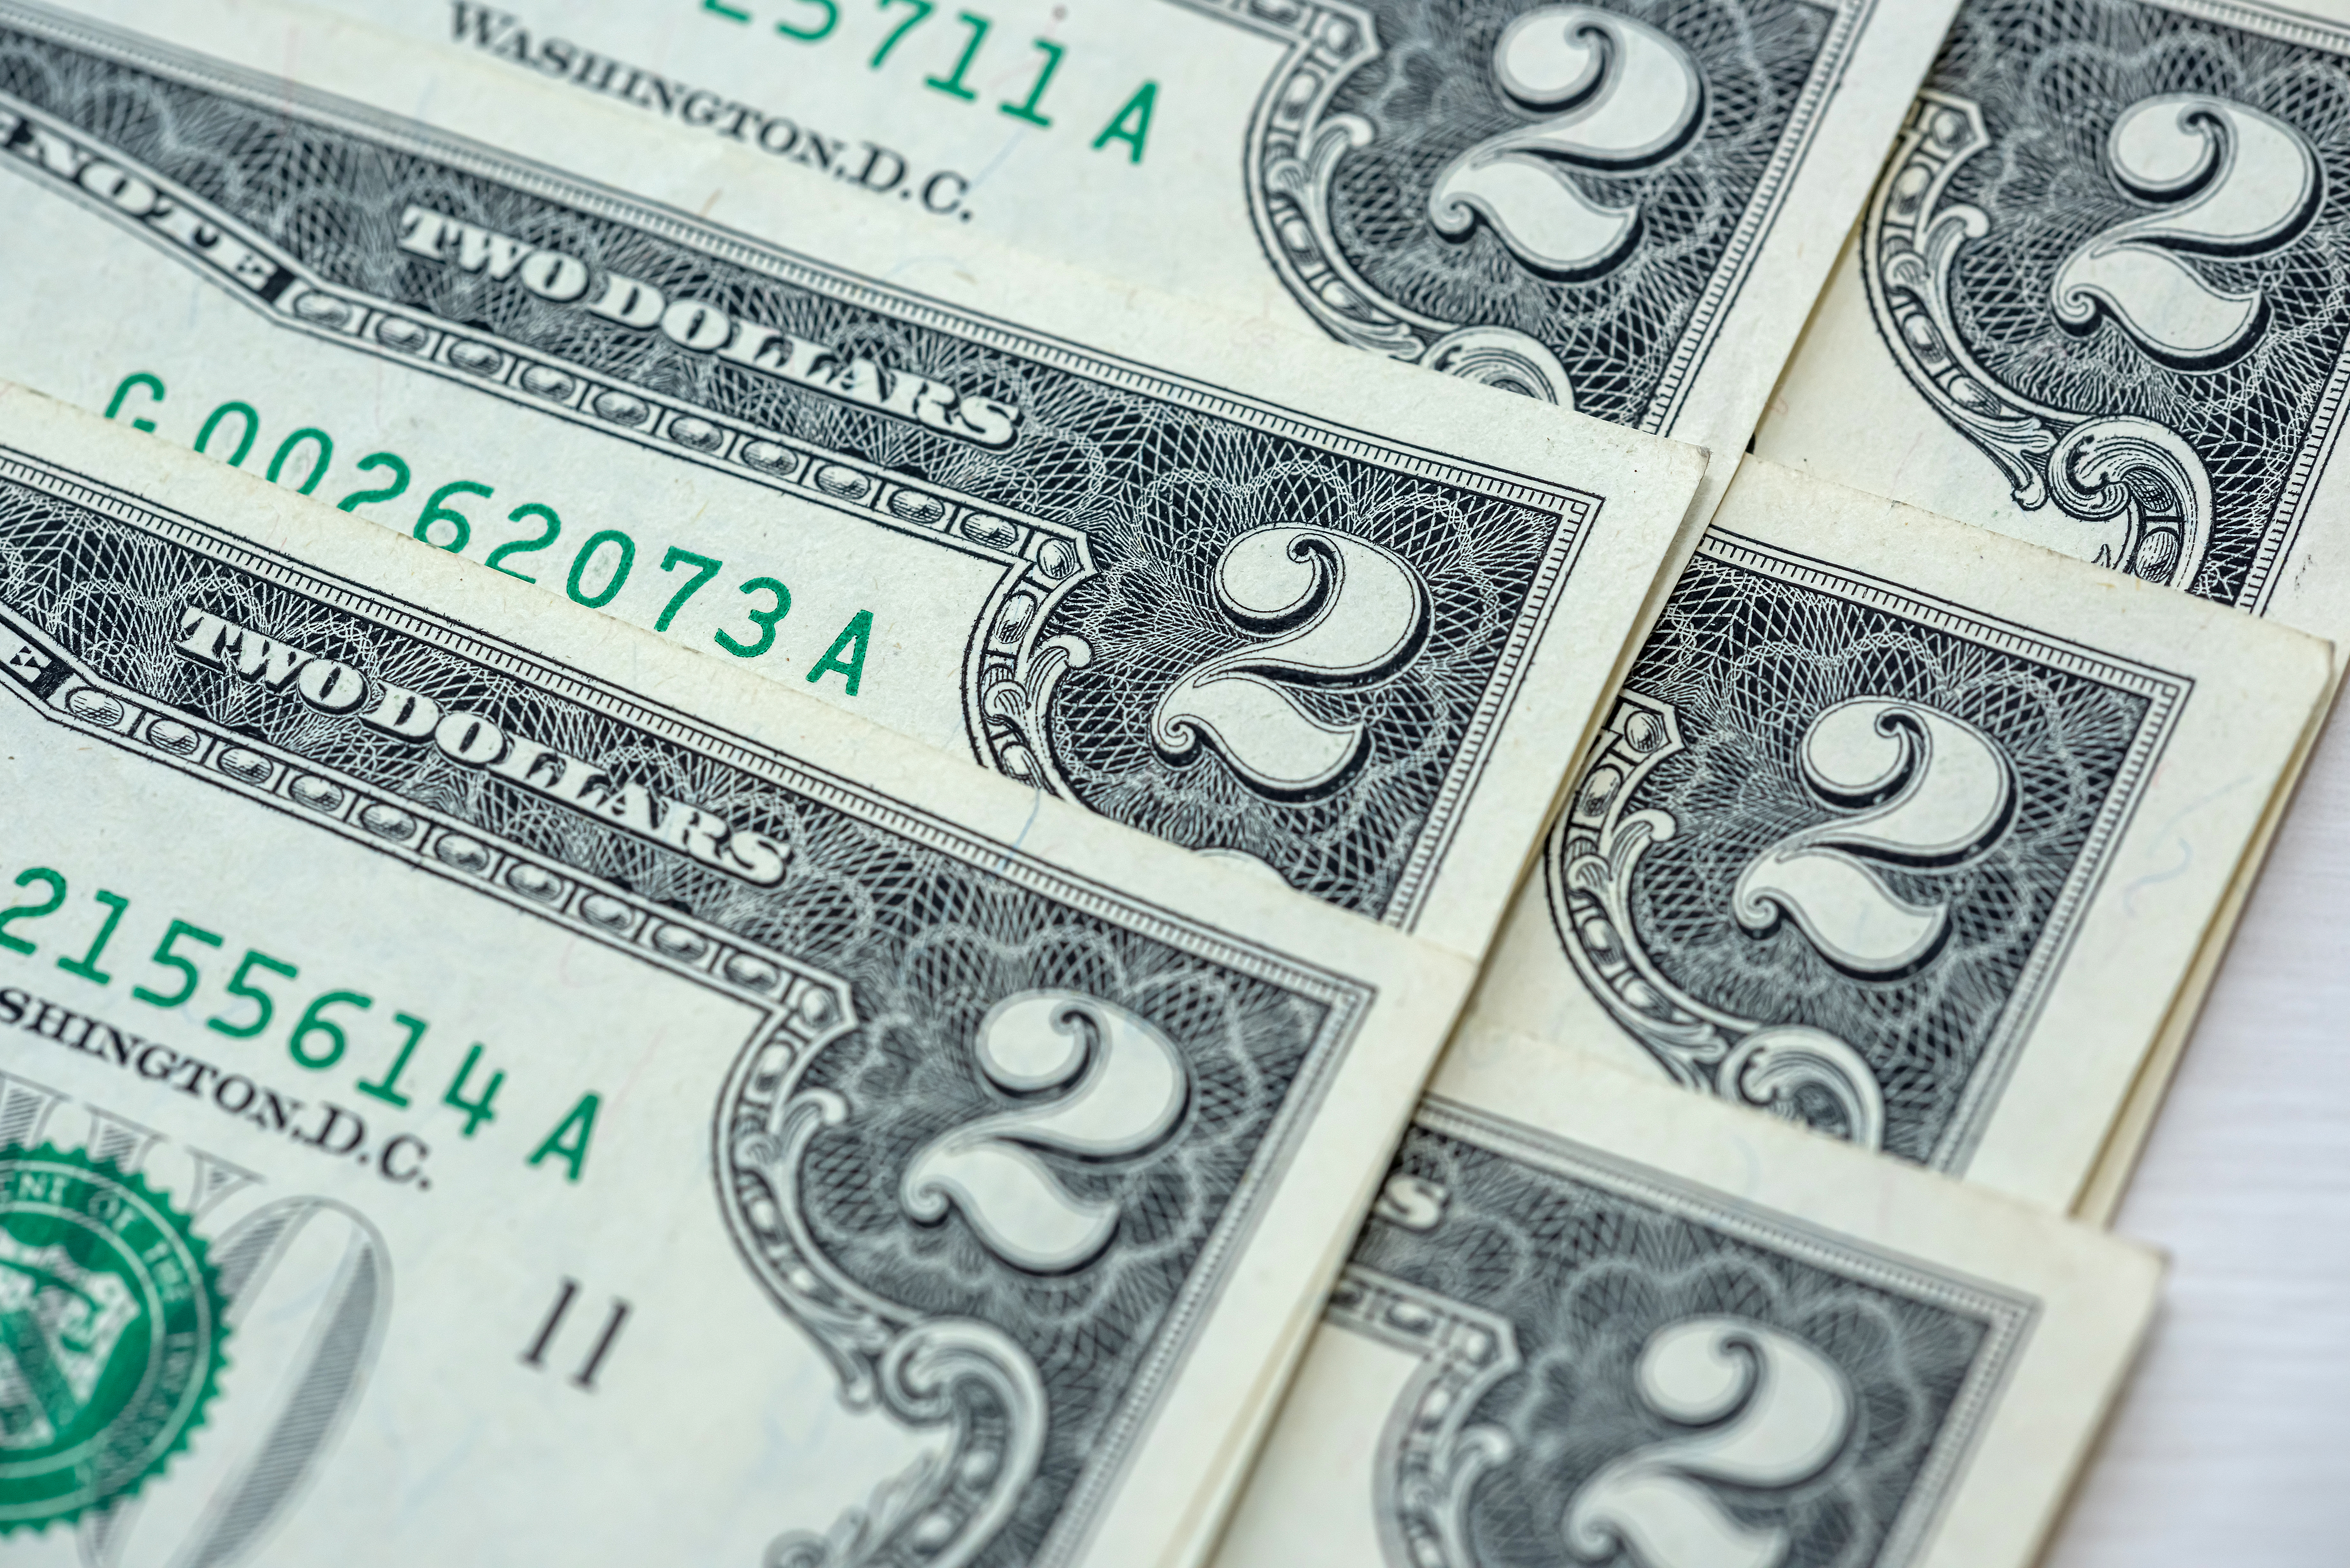 1 Dollar Bills Worth Over $10,000 - RARE Error Currency in Pocket